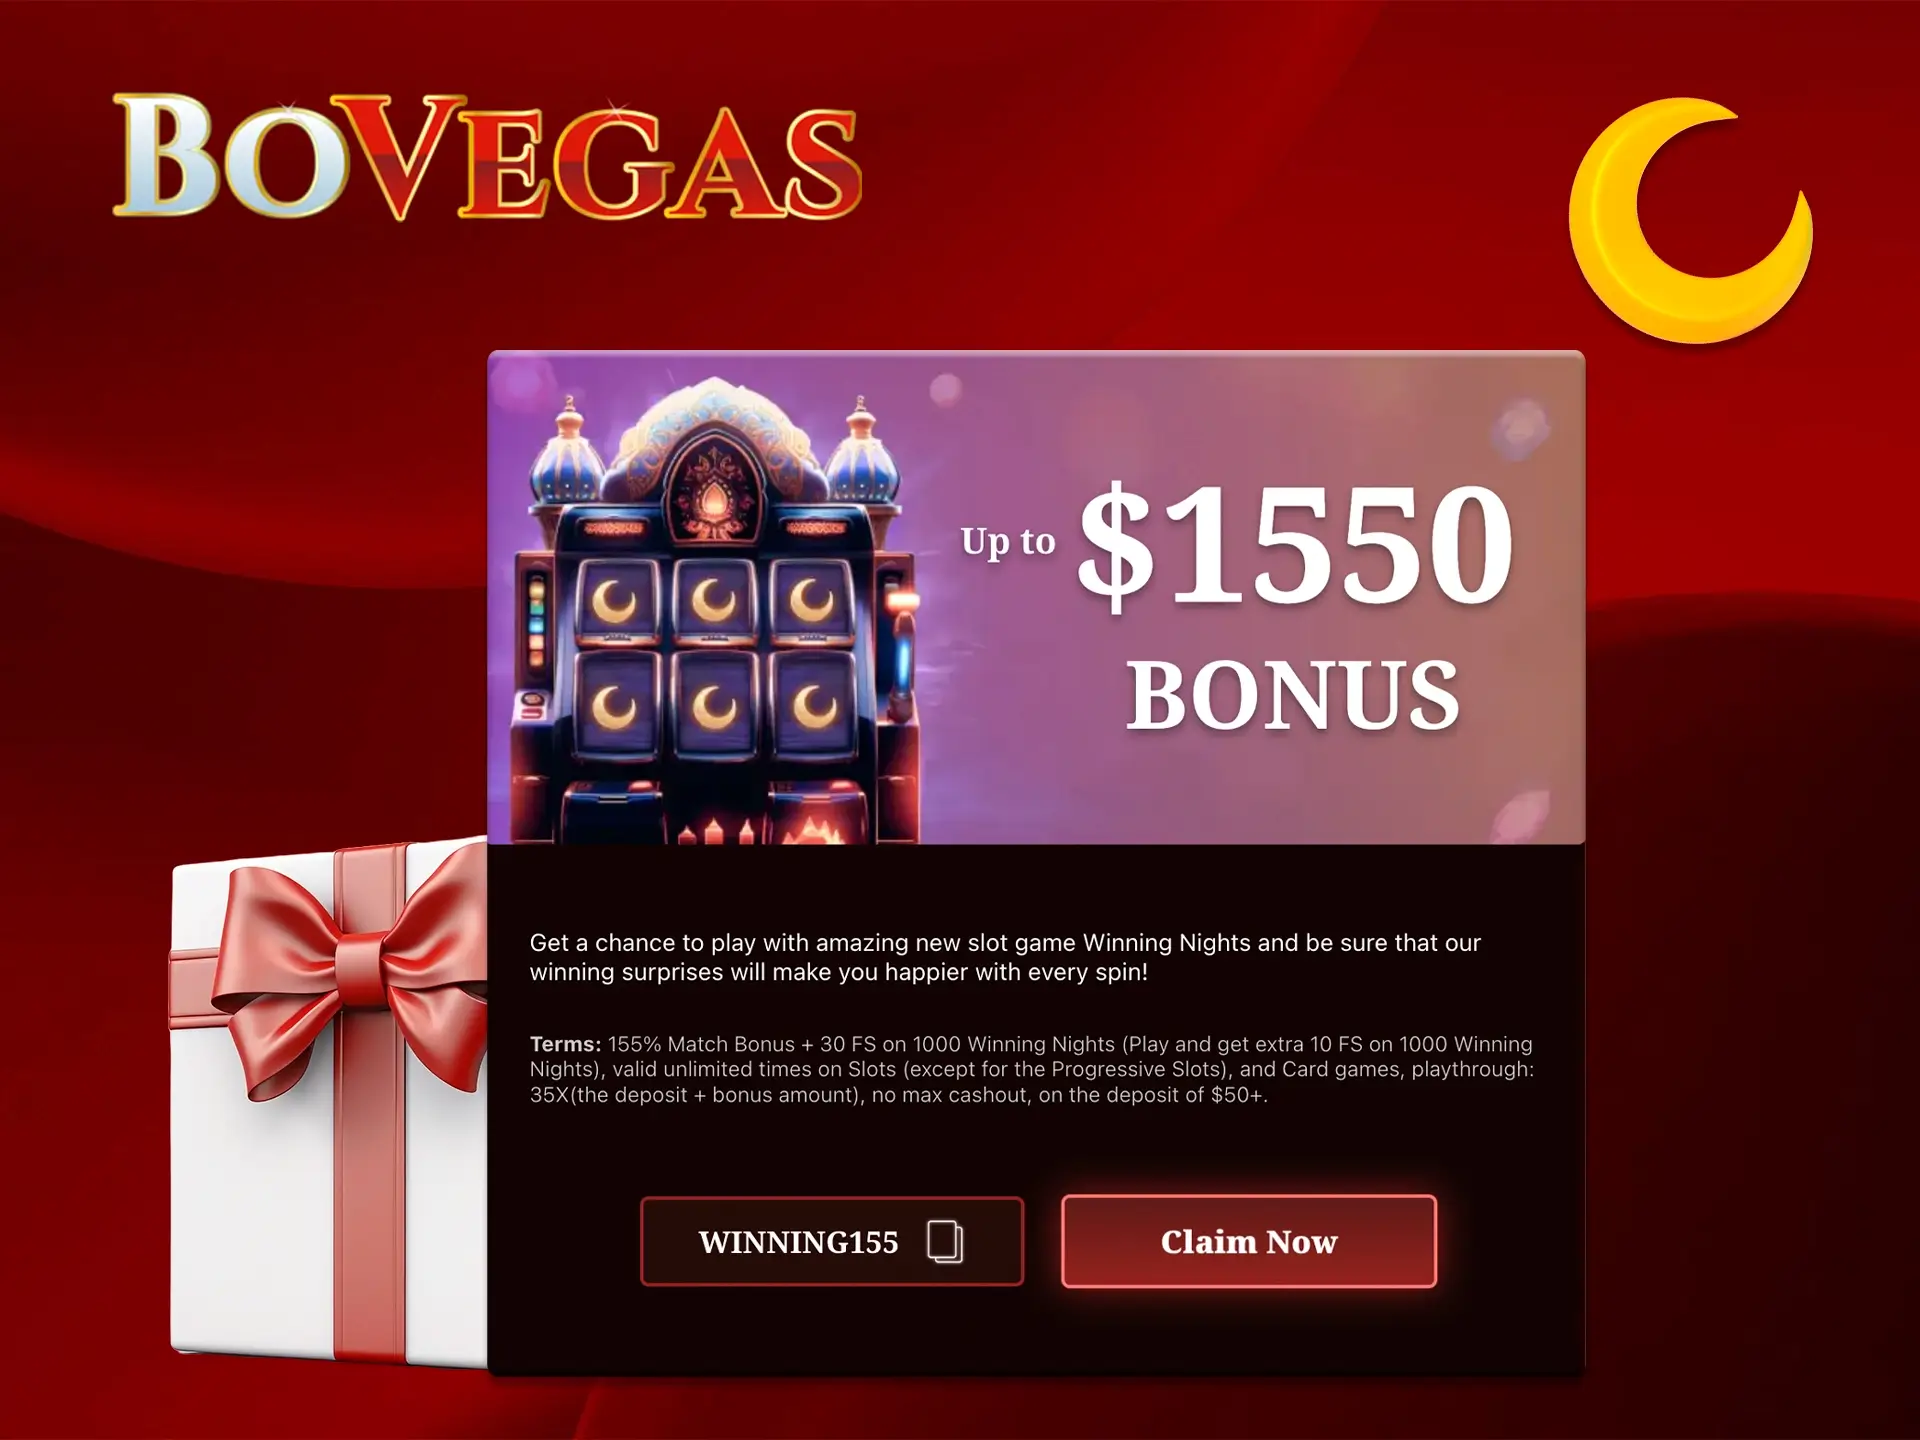 Take advantage of BoVegas' bonus to the famous Winning Nights slot game and earn big bucks.